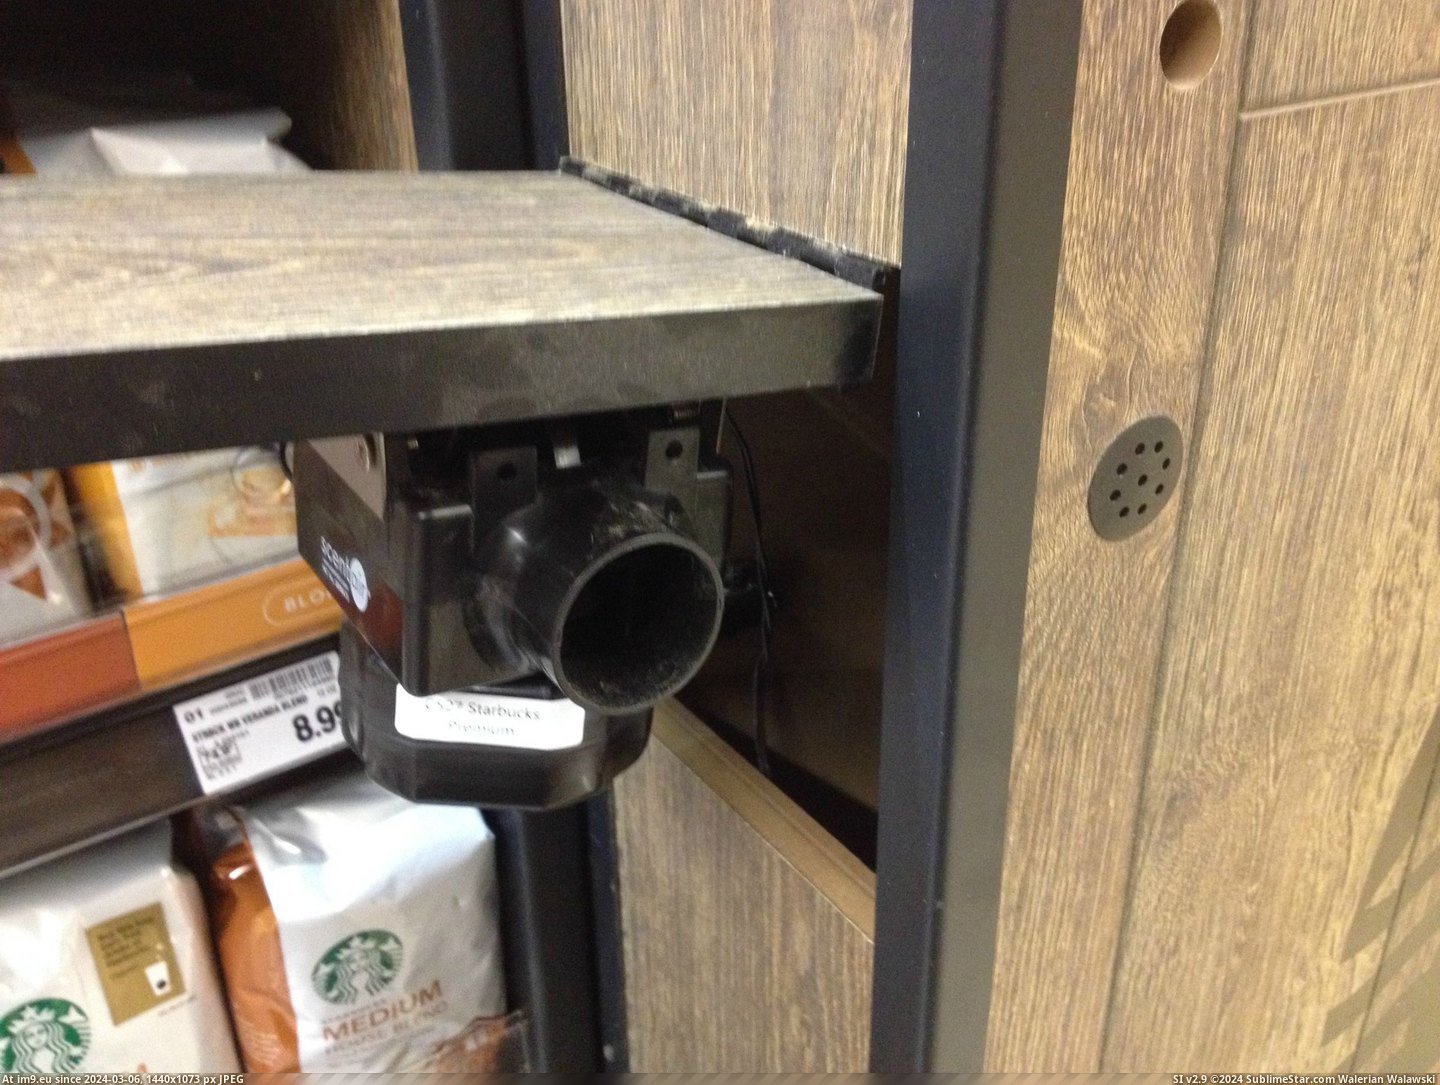 #Work #New #Secret #Smell #Delivery #Starbucks #Coffee #System #Display [Mildlyinteresting] The new Starbucks display at my work has a secret coffee smell delivery system. 5 Pic. (Изображение из альбом My r/MILDLYINTERESTING favs))